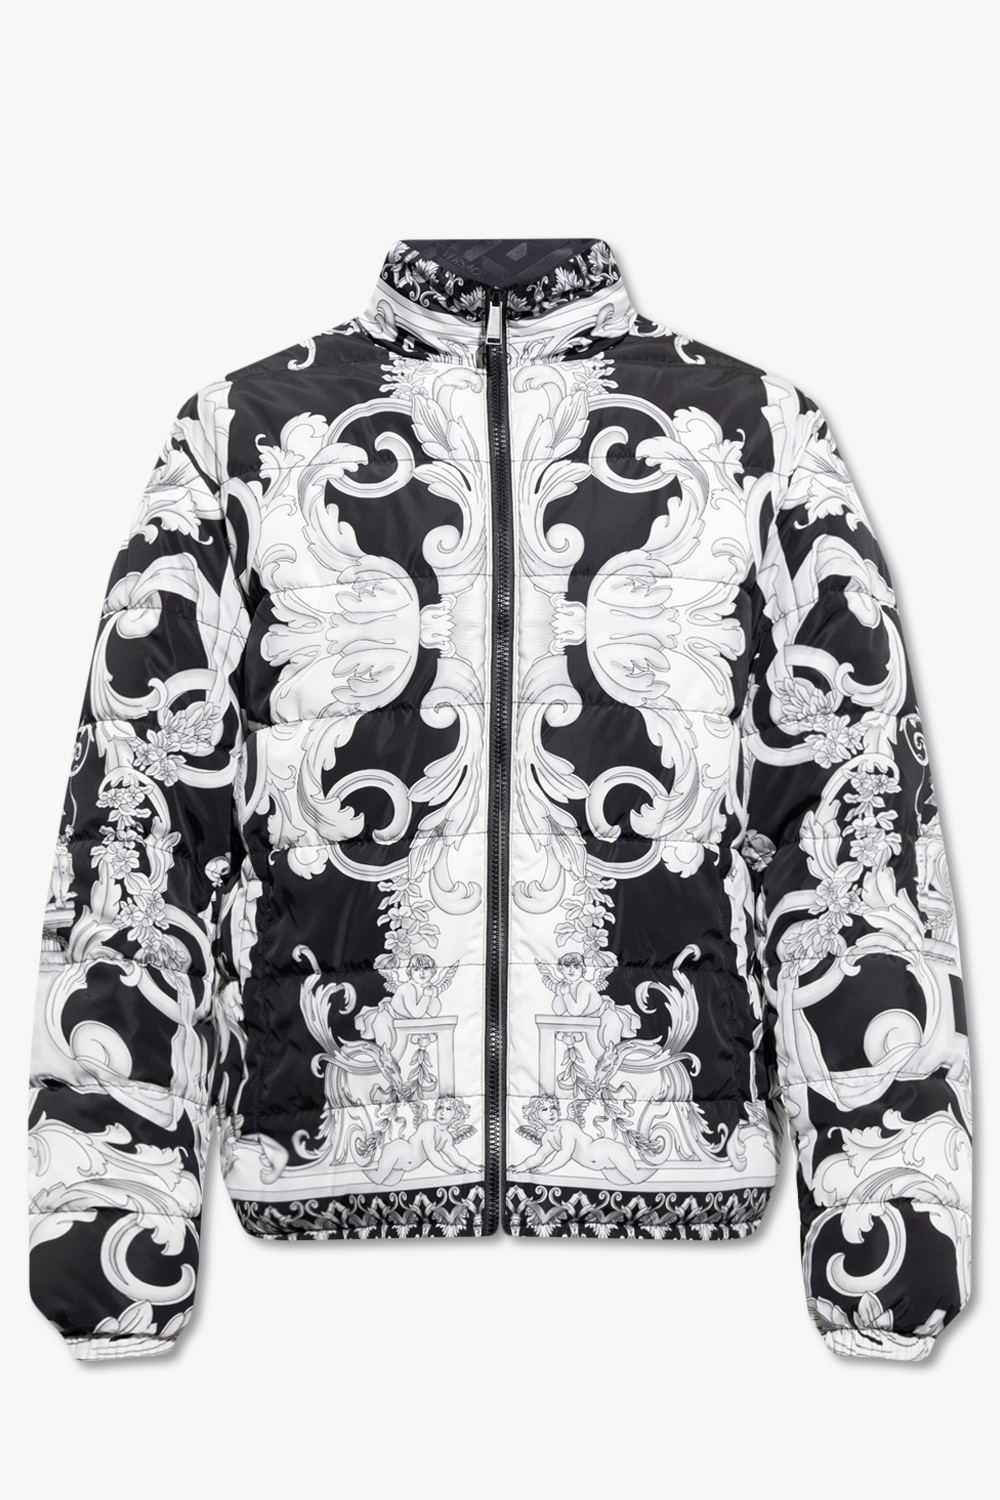 Versace Reversible scotch jacket